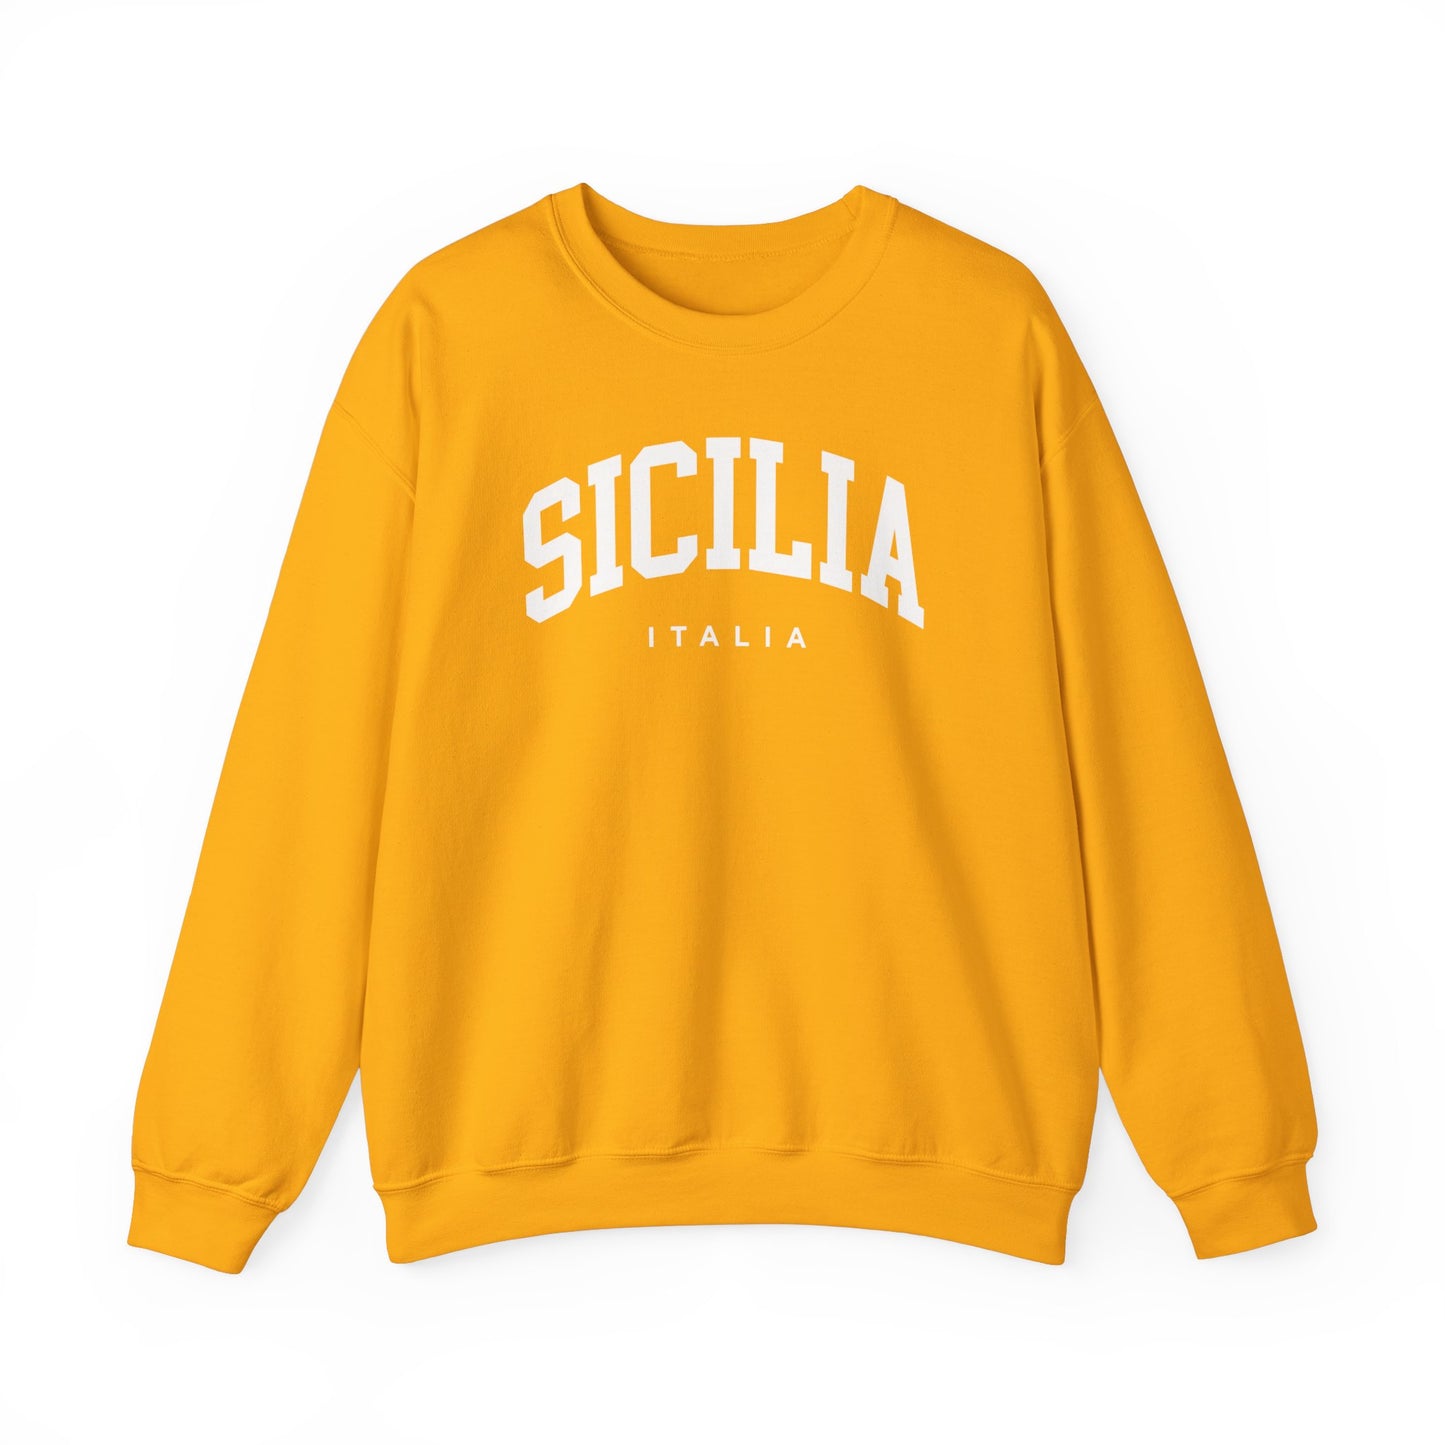 Sicily Italy Sweatshirt